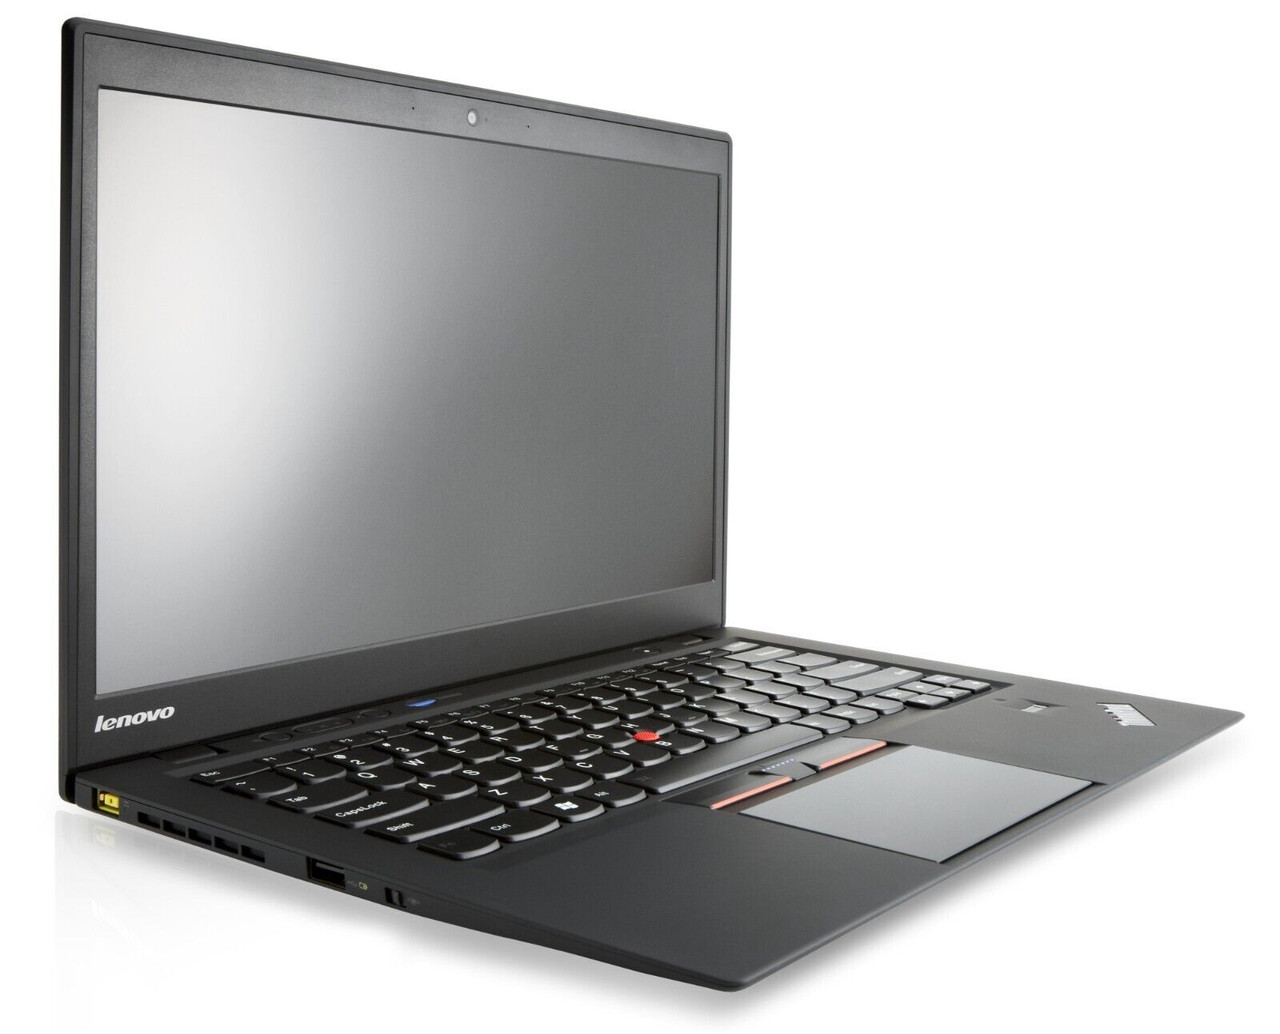 Lenovo ThinkPad X1 Carbon Laptop Computer 14